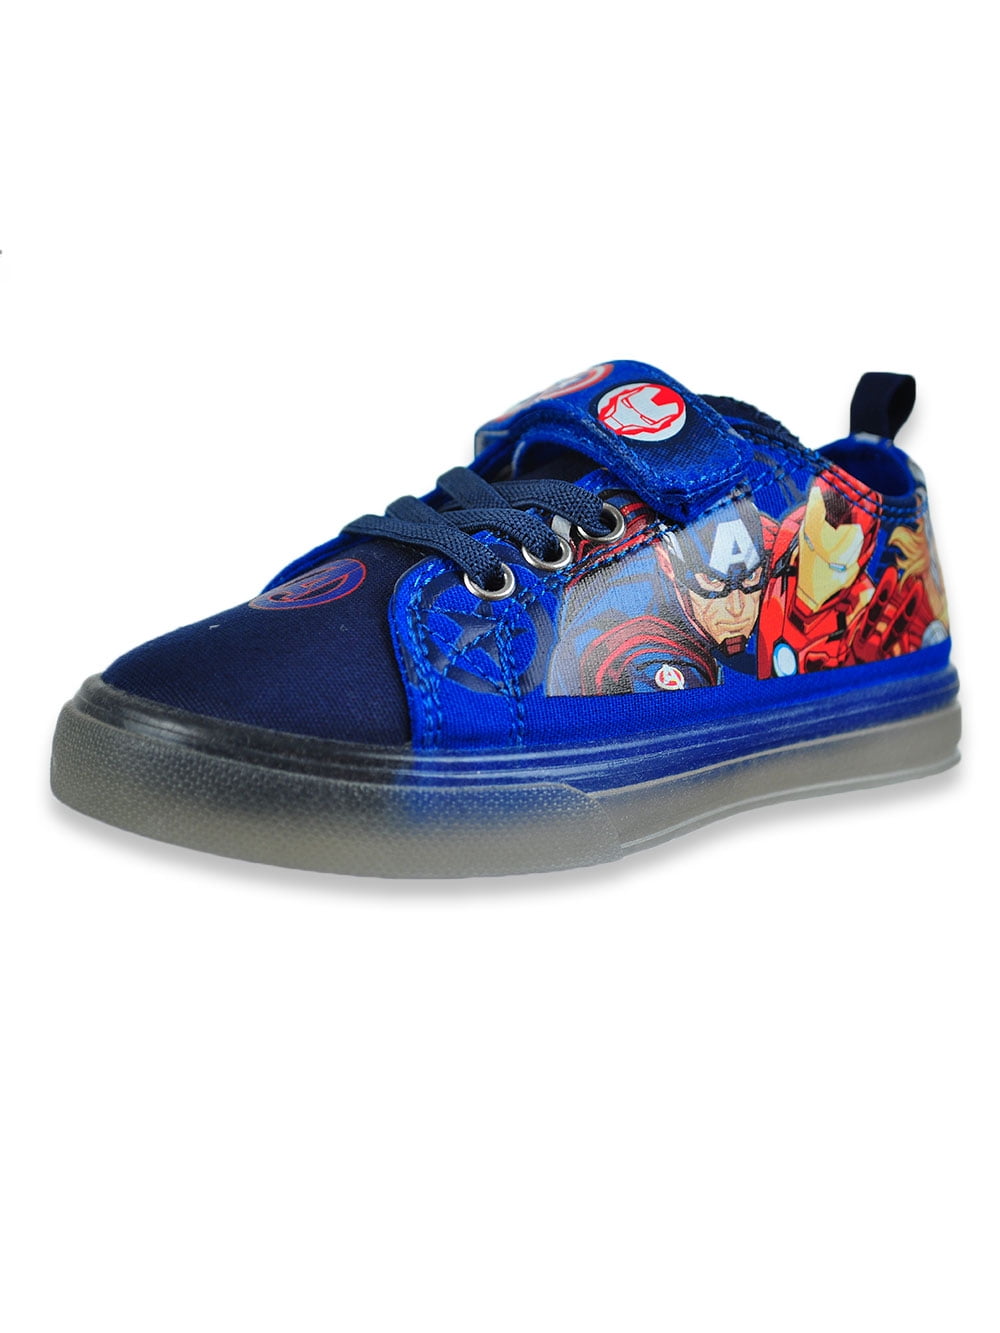 Kids MARVEL Comics Avengers Slip-On Canvas Sneakers Keds Tennis Shoes 1-4 Boys 